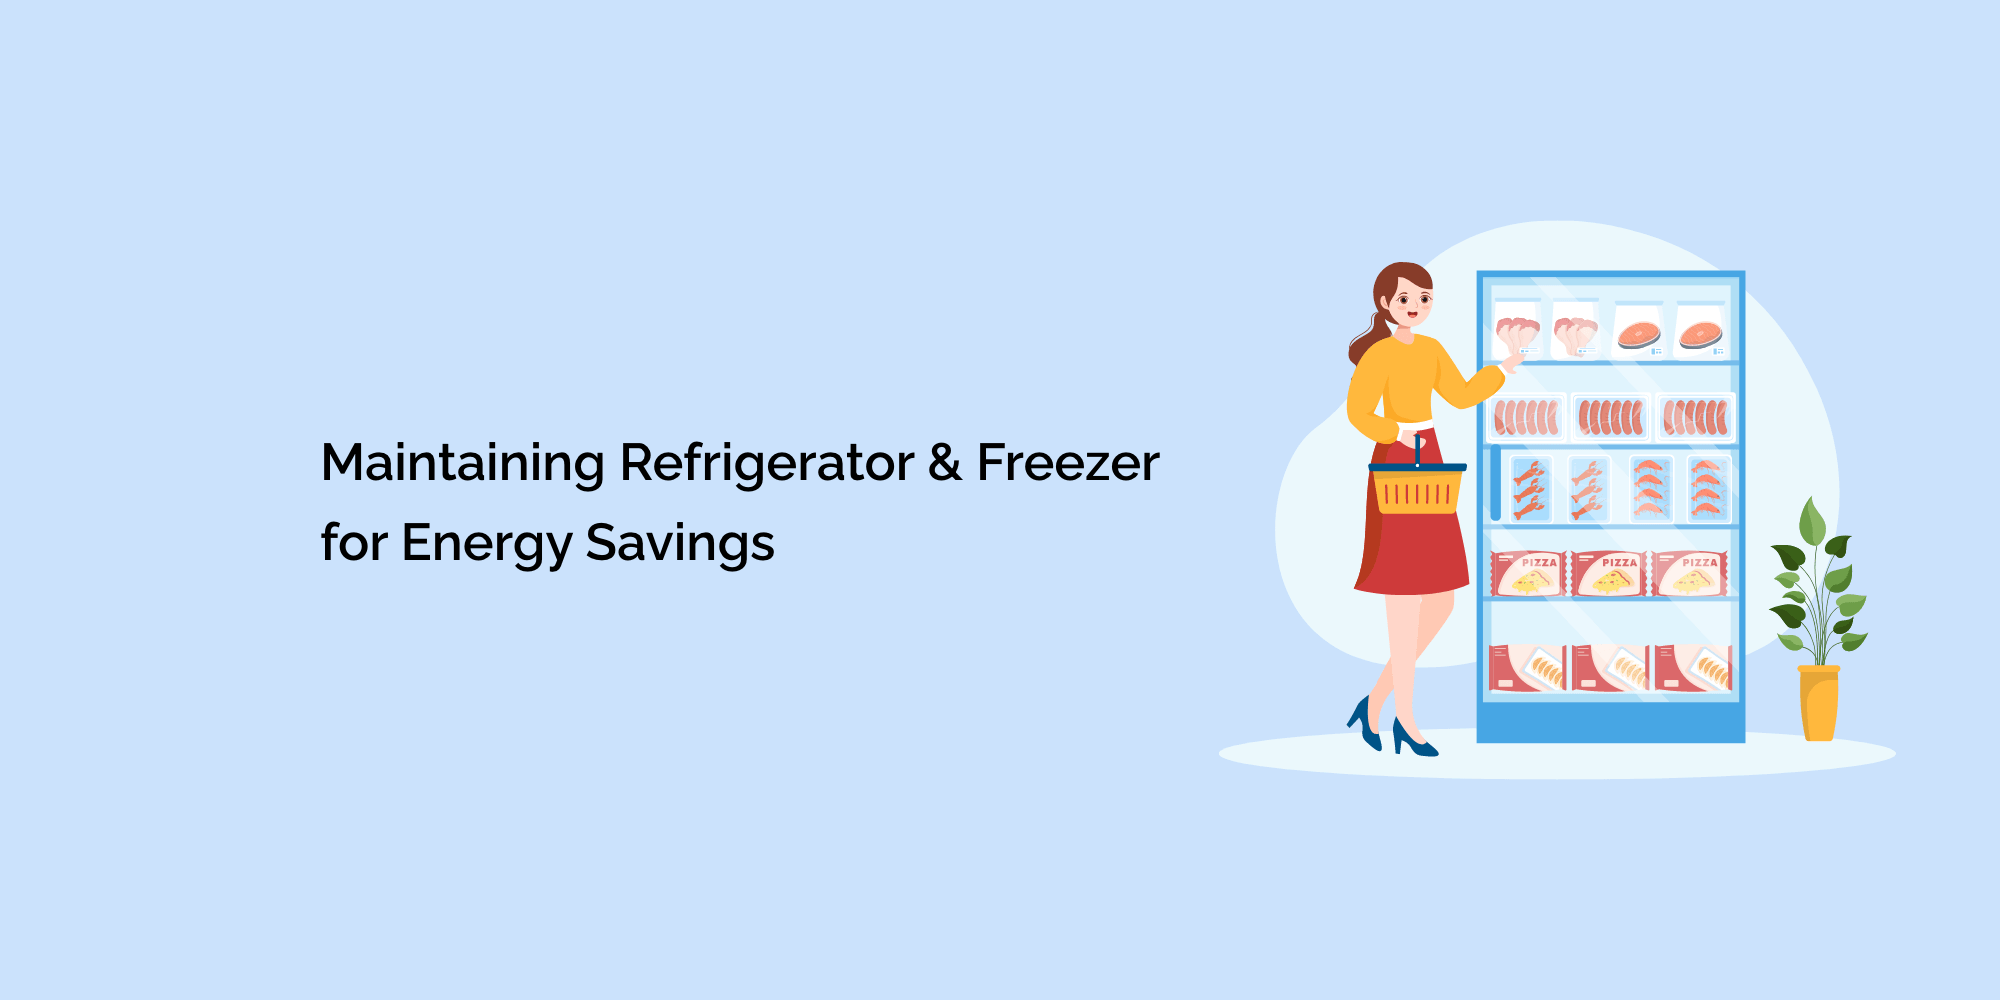 Maintaining Refrigerator & Freezer for Energy Savings